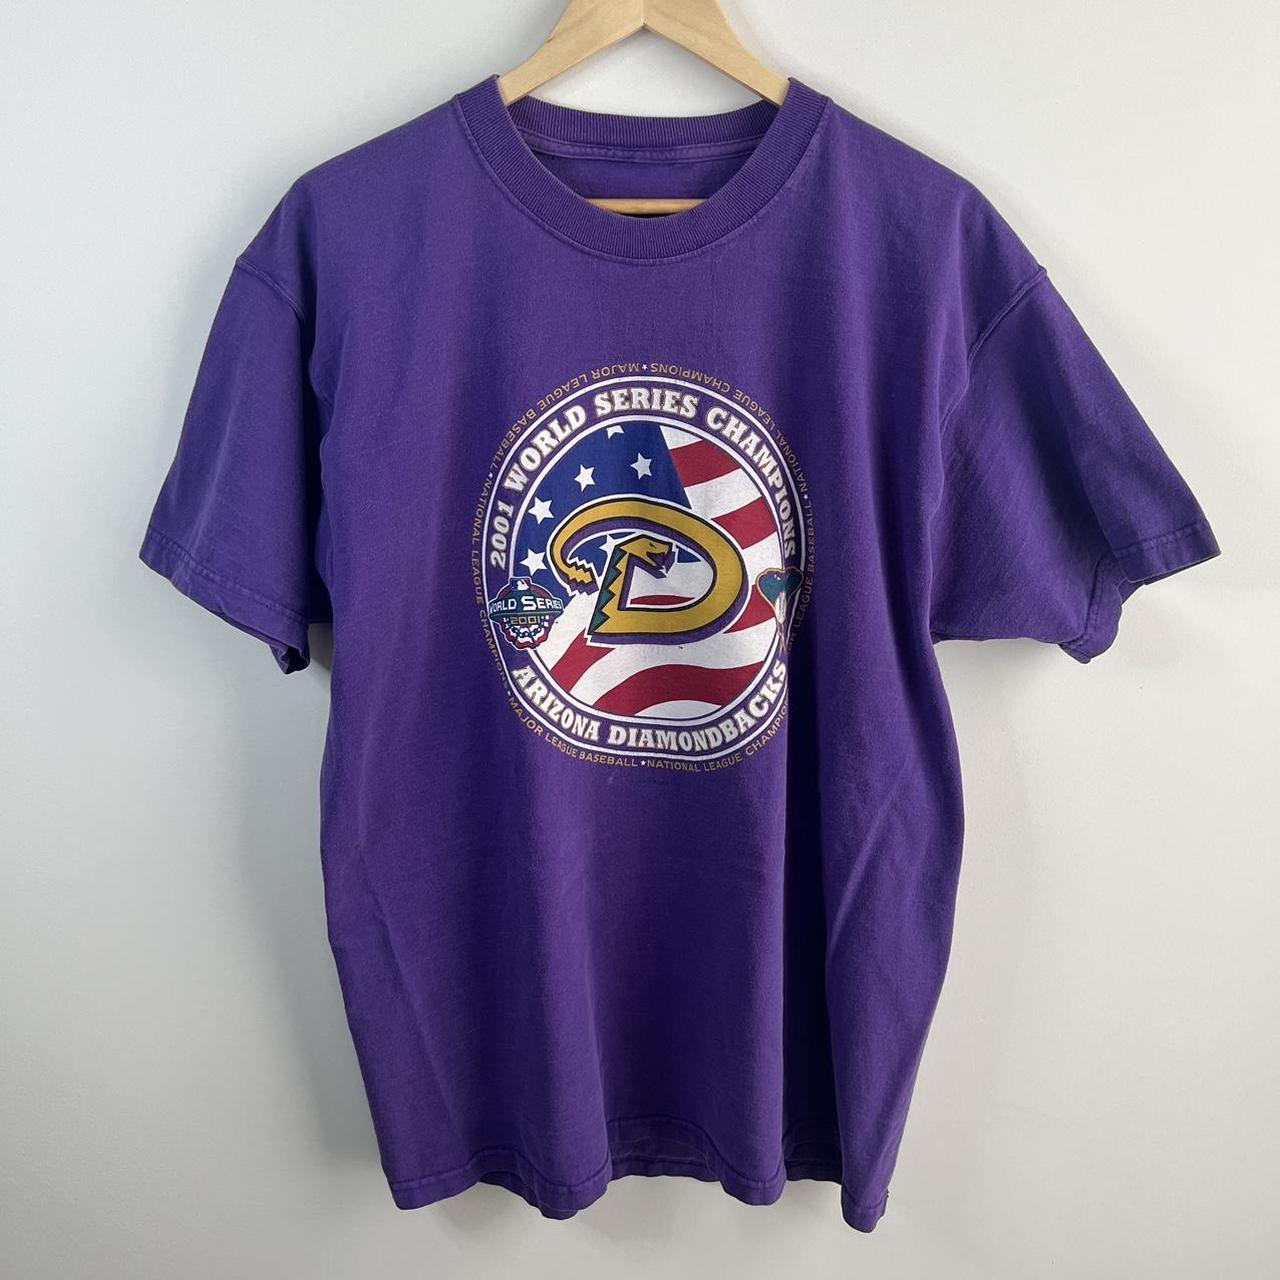 Vintage Arizona Diamondbacks Shirt 2001 World Series - Depop